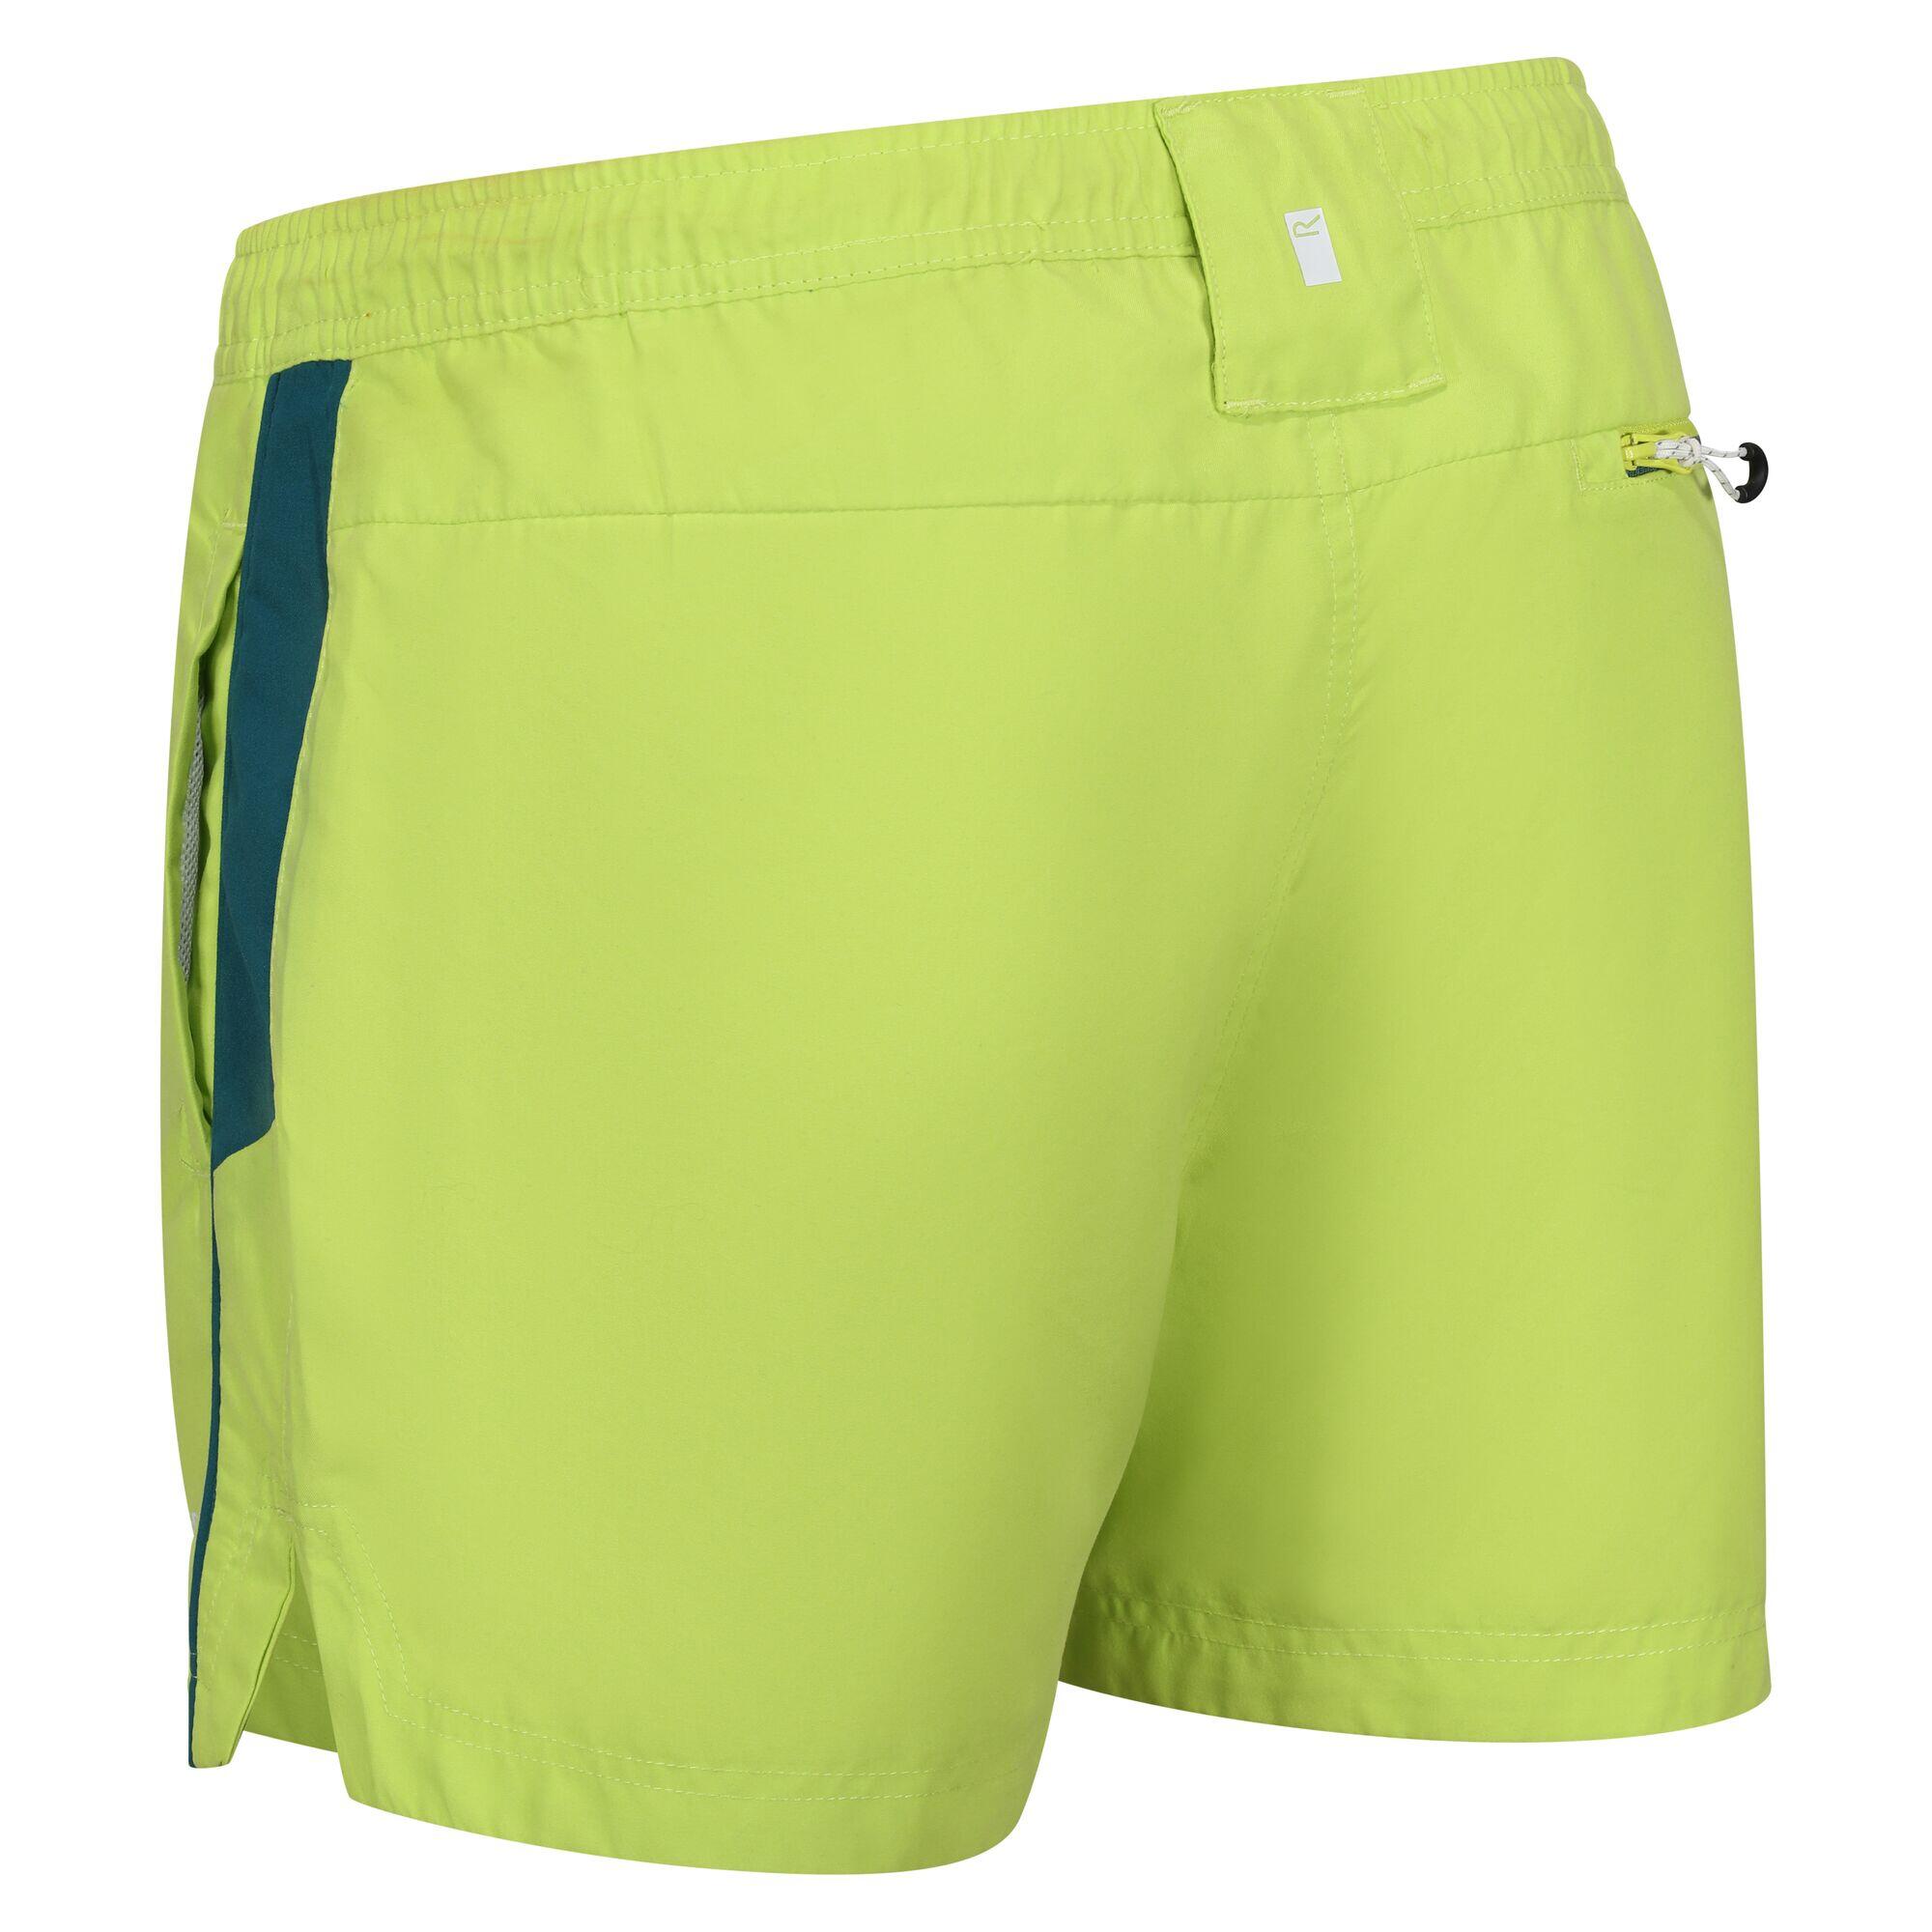 Rehere Men's Swim Shorts - Kiwi Green 5/5